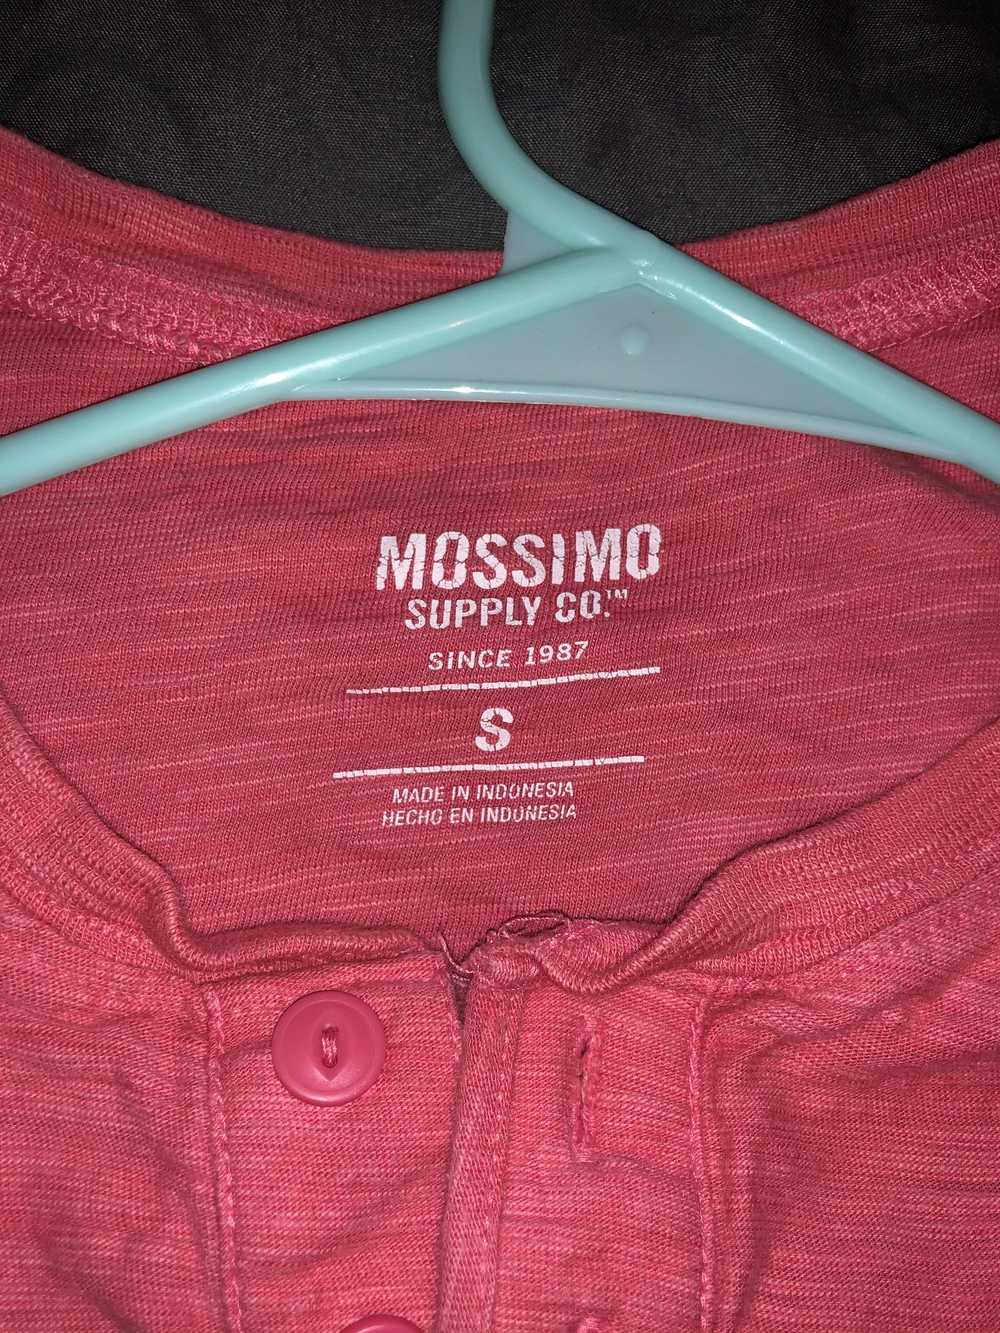 Mossimo Mossimo Supply Co S/S - image 2